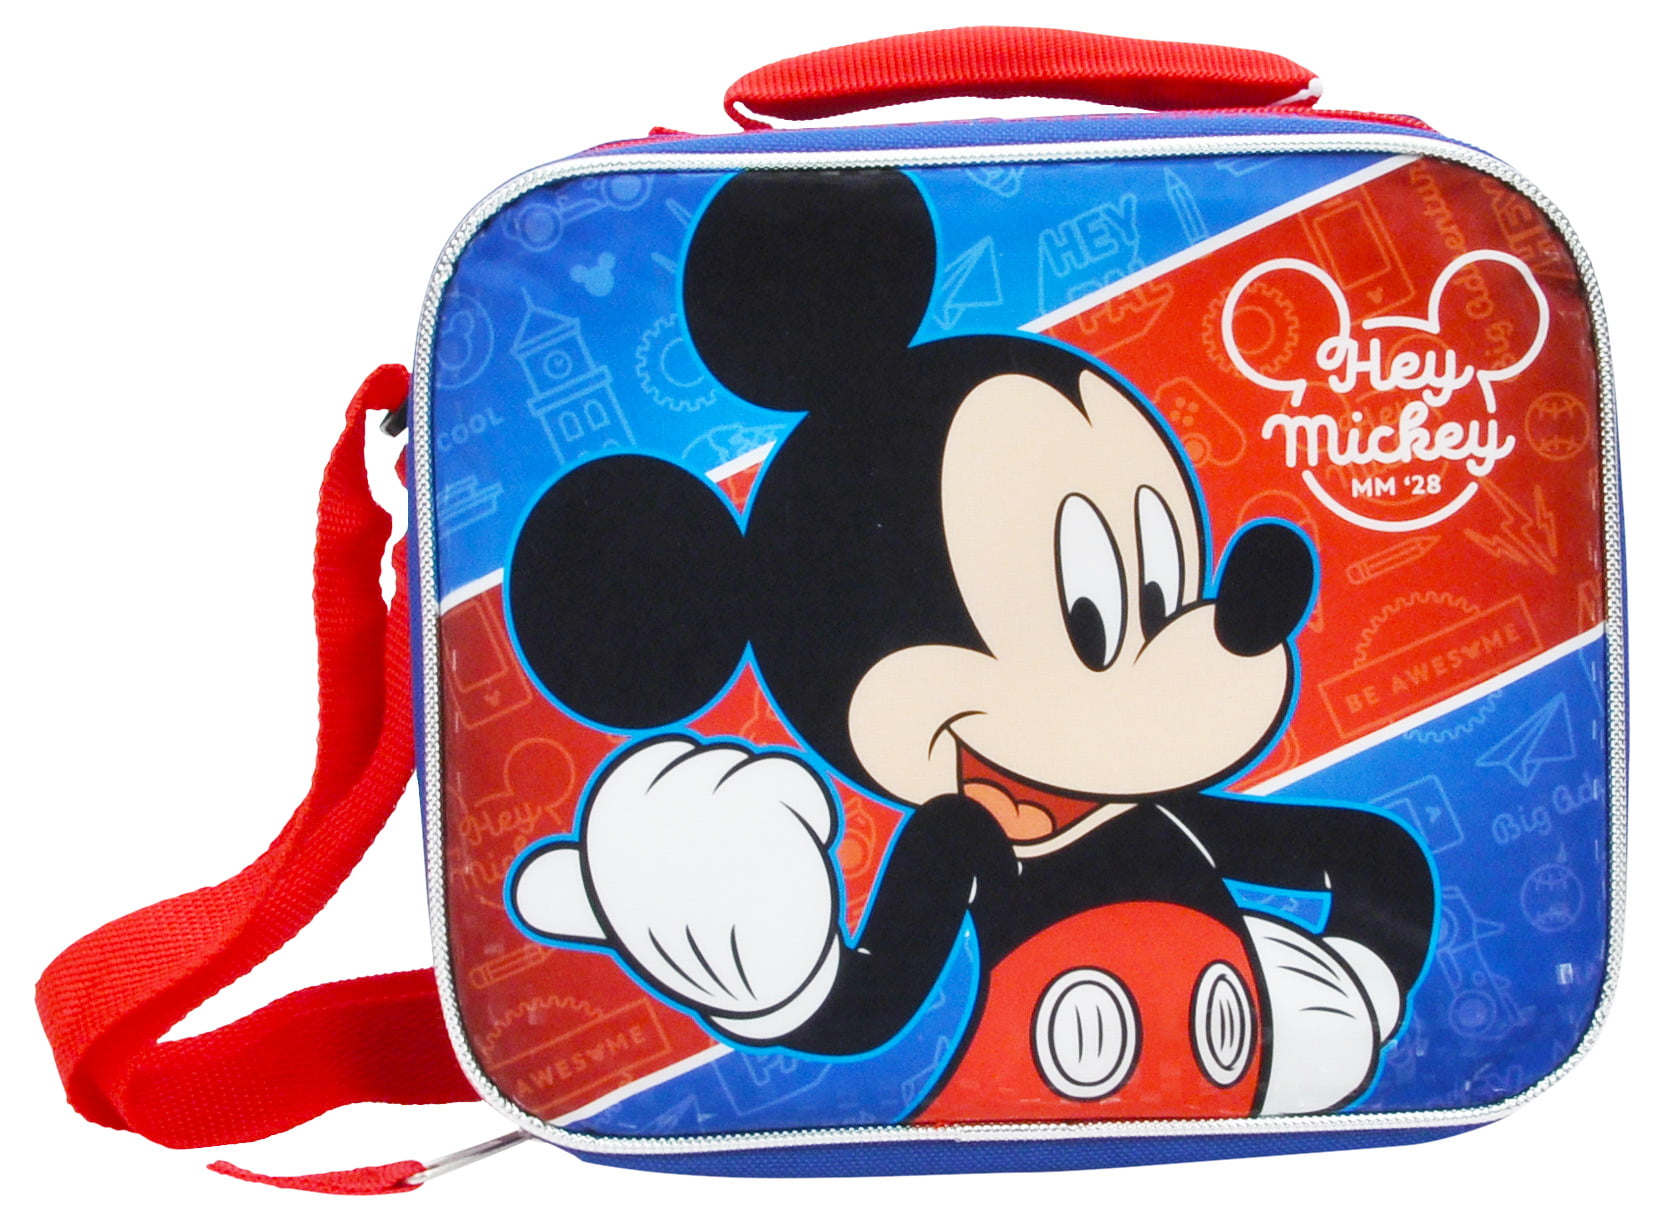 Mickey Mouse Disney Lunch Bag Childrens Kids Boys girls blue picnic school